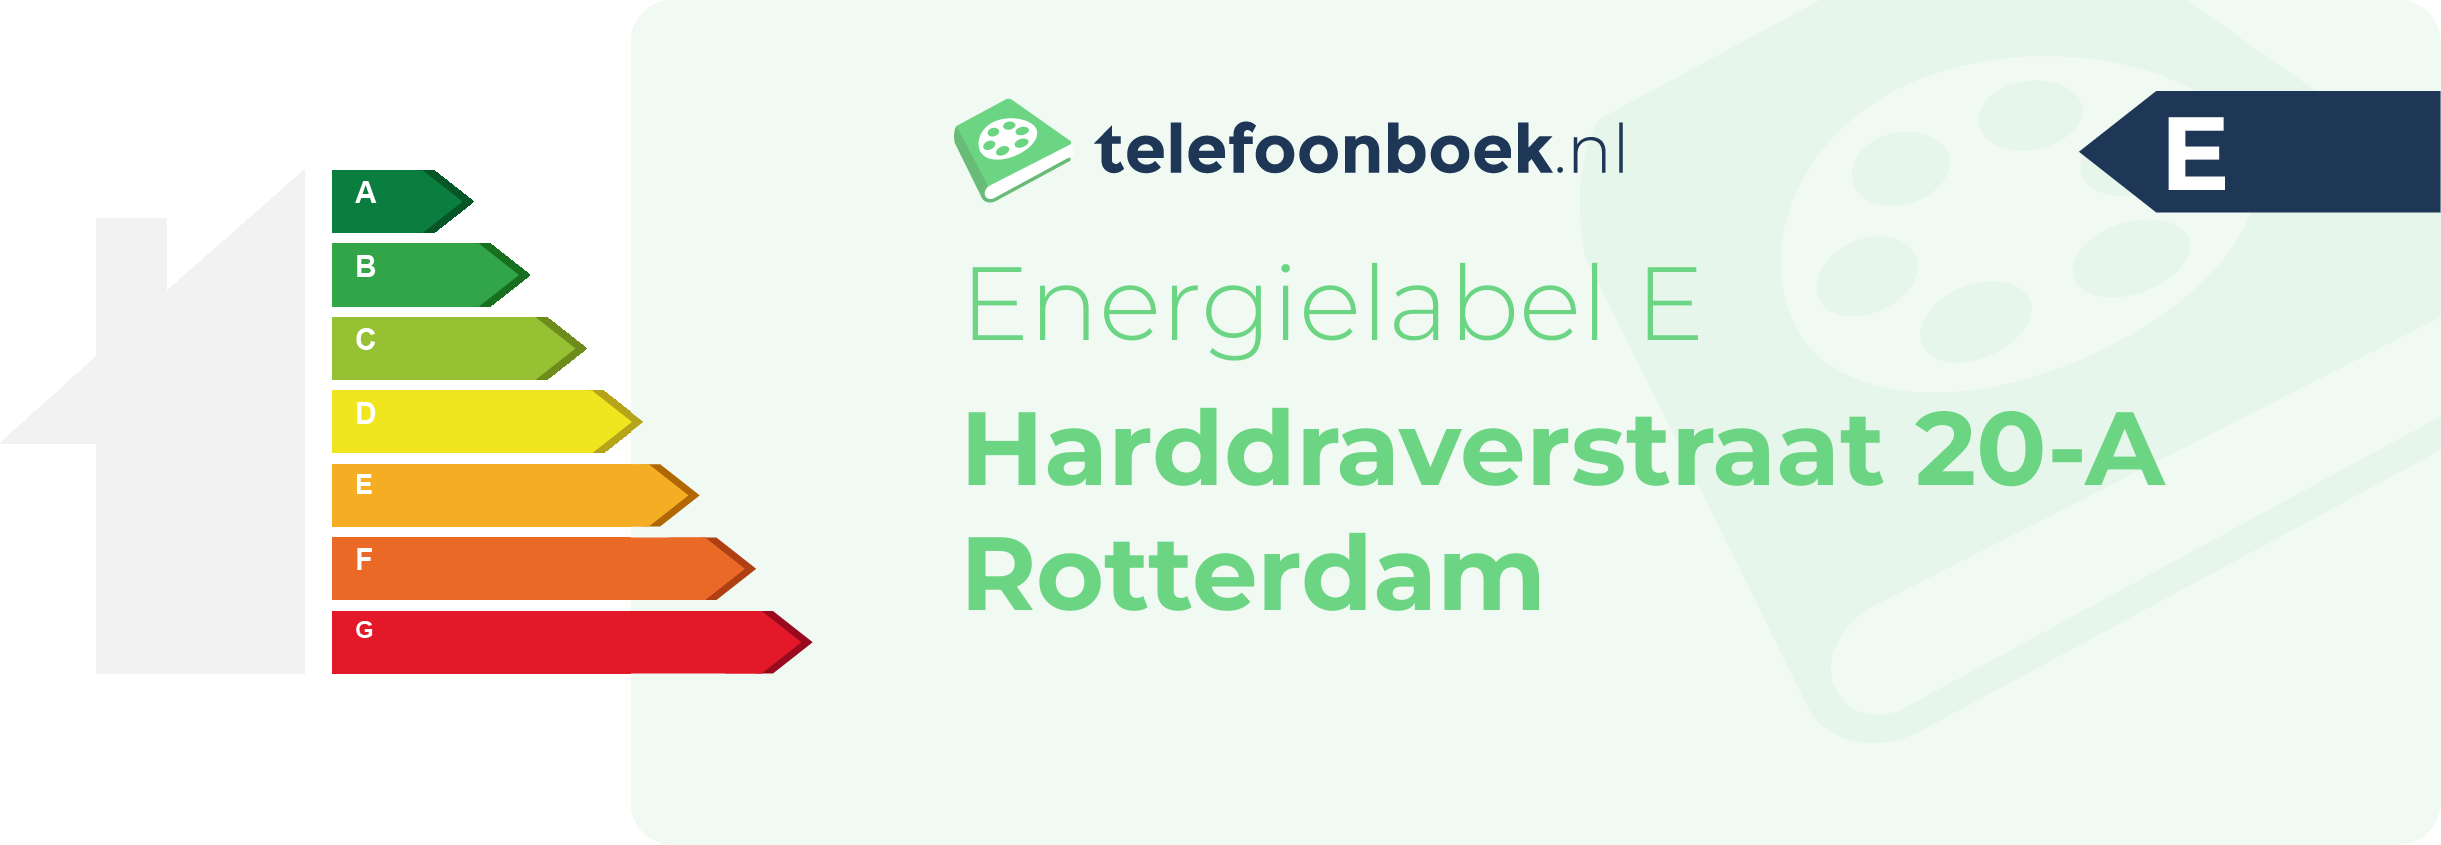 Energielabel Harddraverstraat 20-A Rotterdam